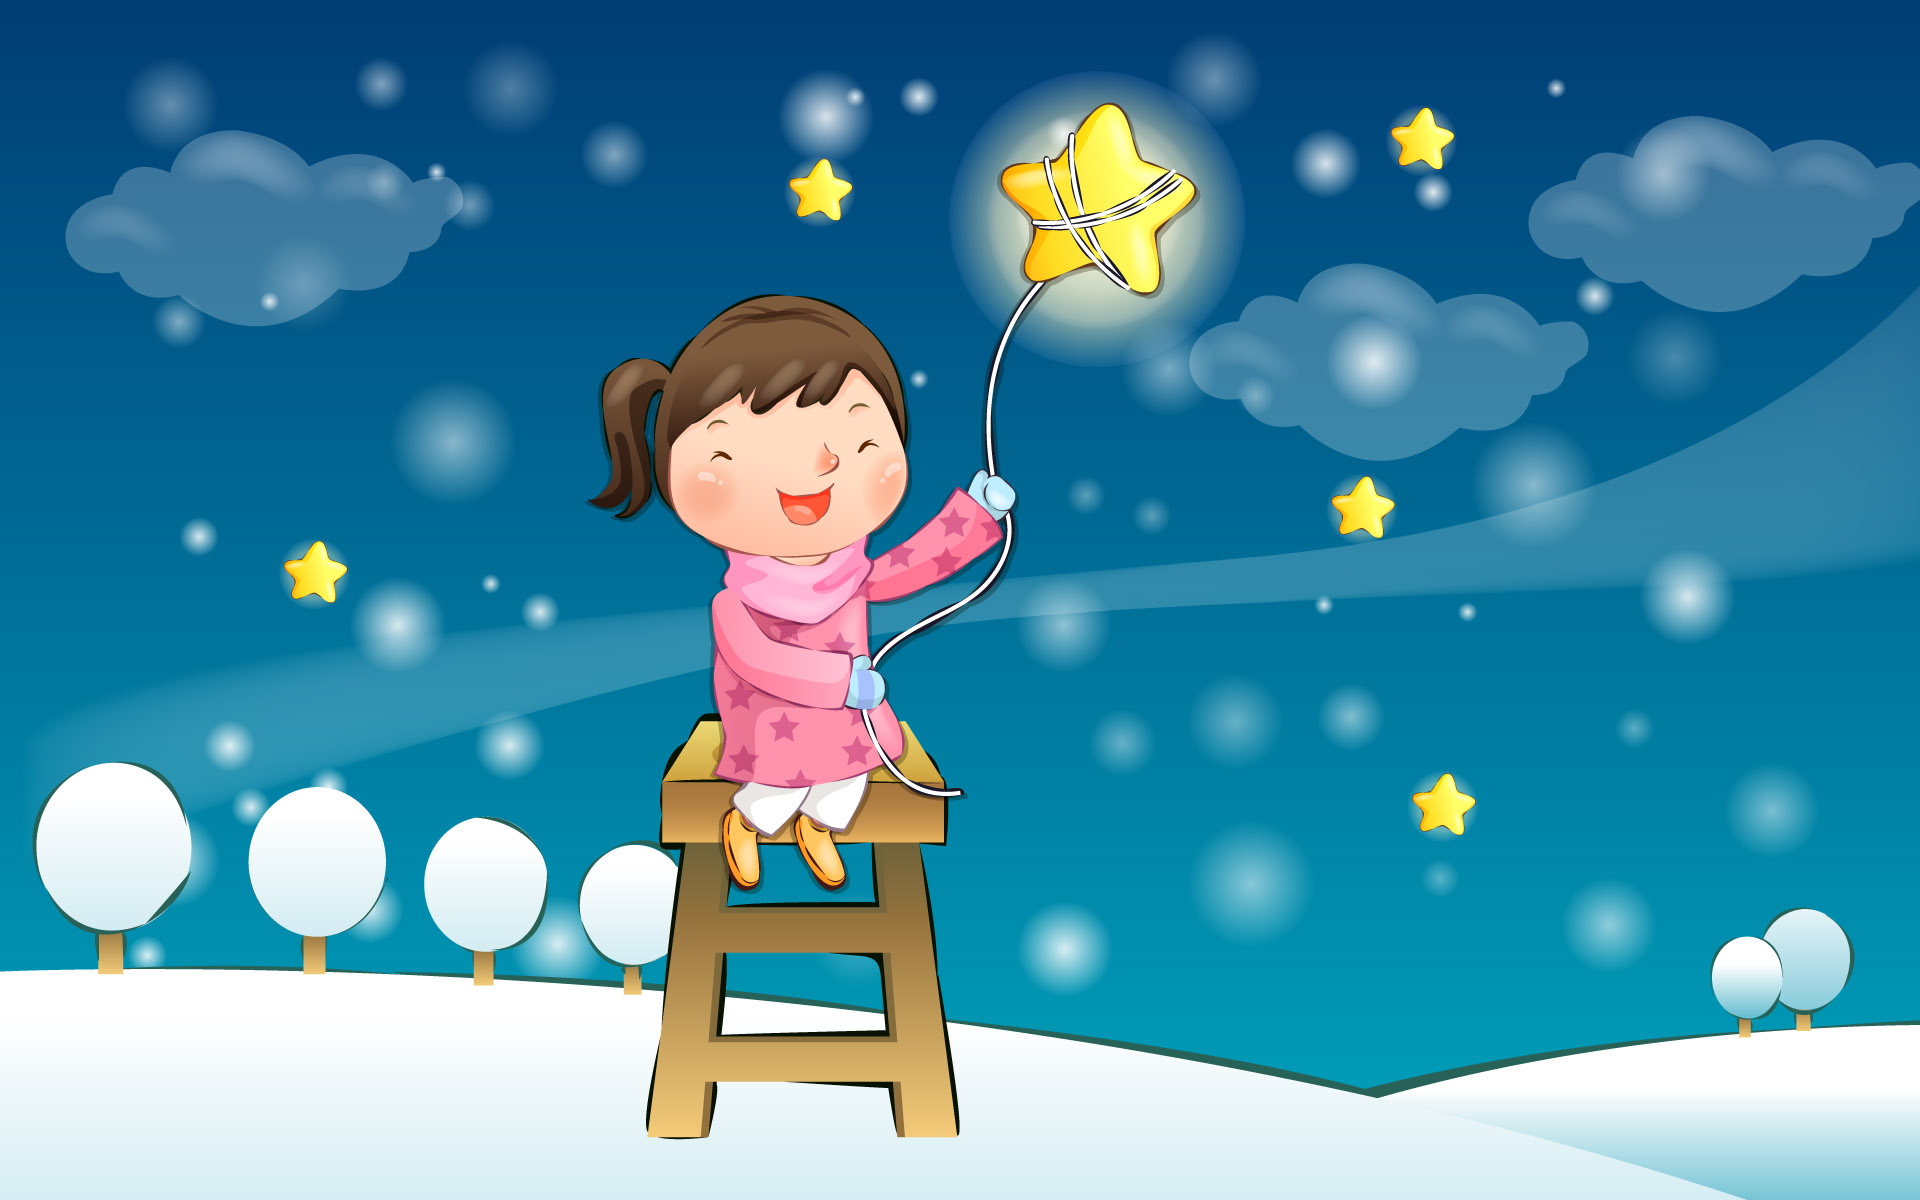 Children'-s Day Art Illustrations - Cutest Cartoon Images Hd 4k , HD Wallpaper & Backgrounds